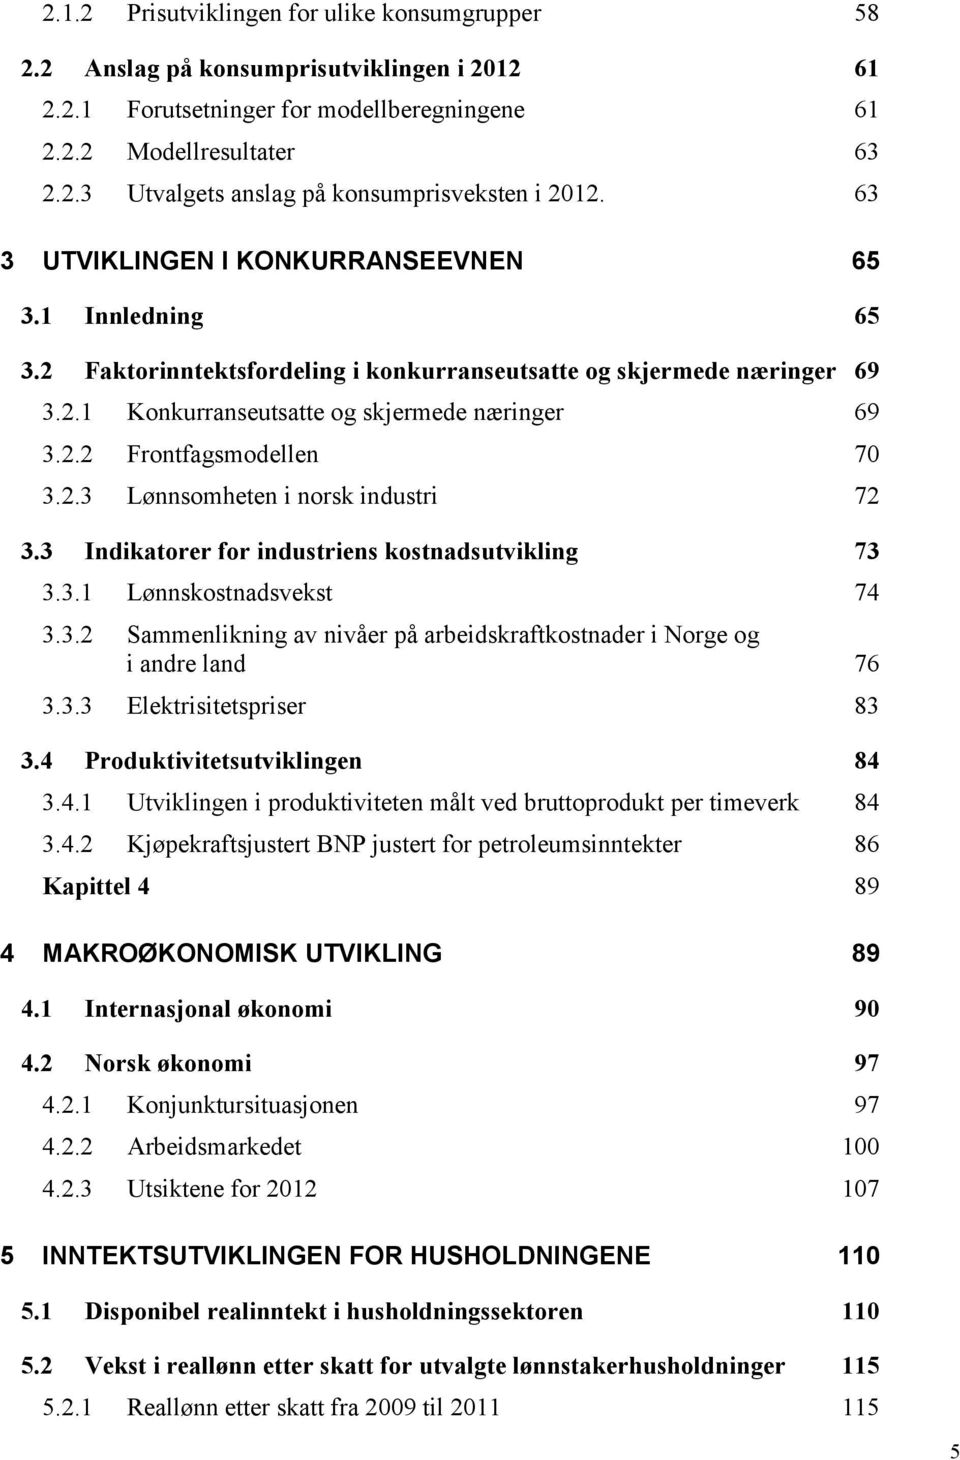 2.3 Lønnsomheten i norsk industri 72 3.3 Indikatorer for industriens kostnadsutvikling 73 3.3.1 Lønnskostnadsvekst 74 3.3.2 Sammenlikning av nivåer på arbeidskraftkostnader i Norge og i andre land 76 3.